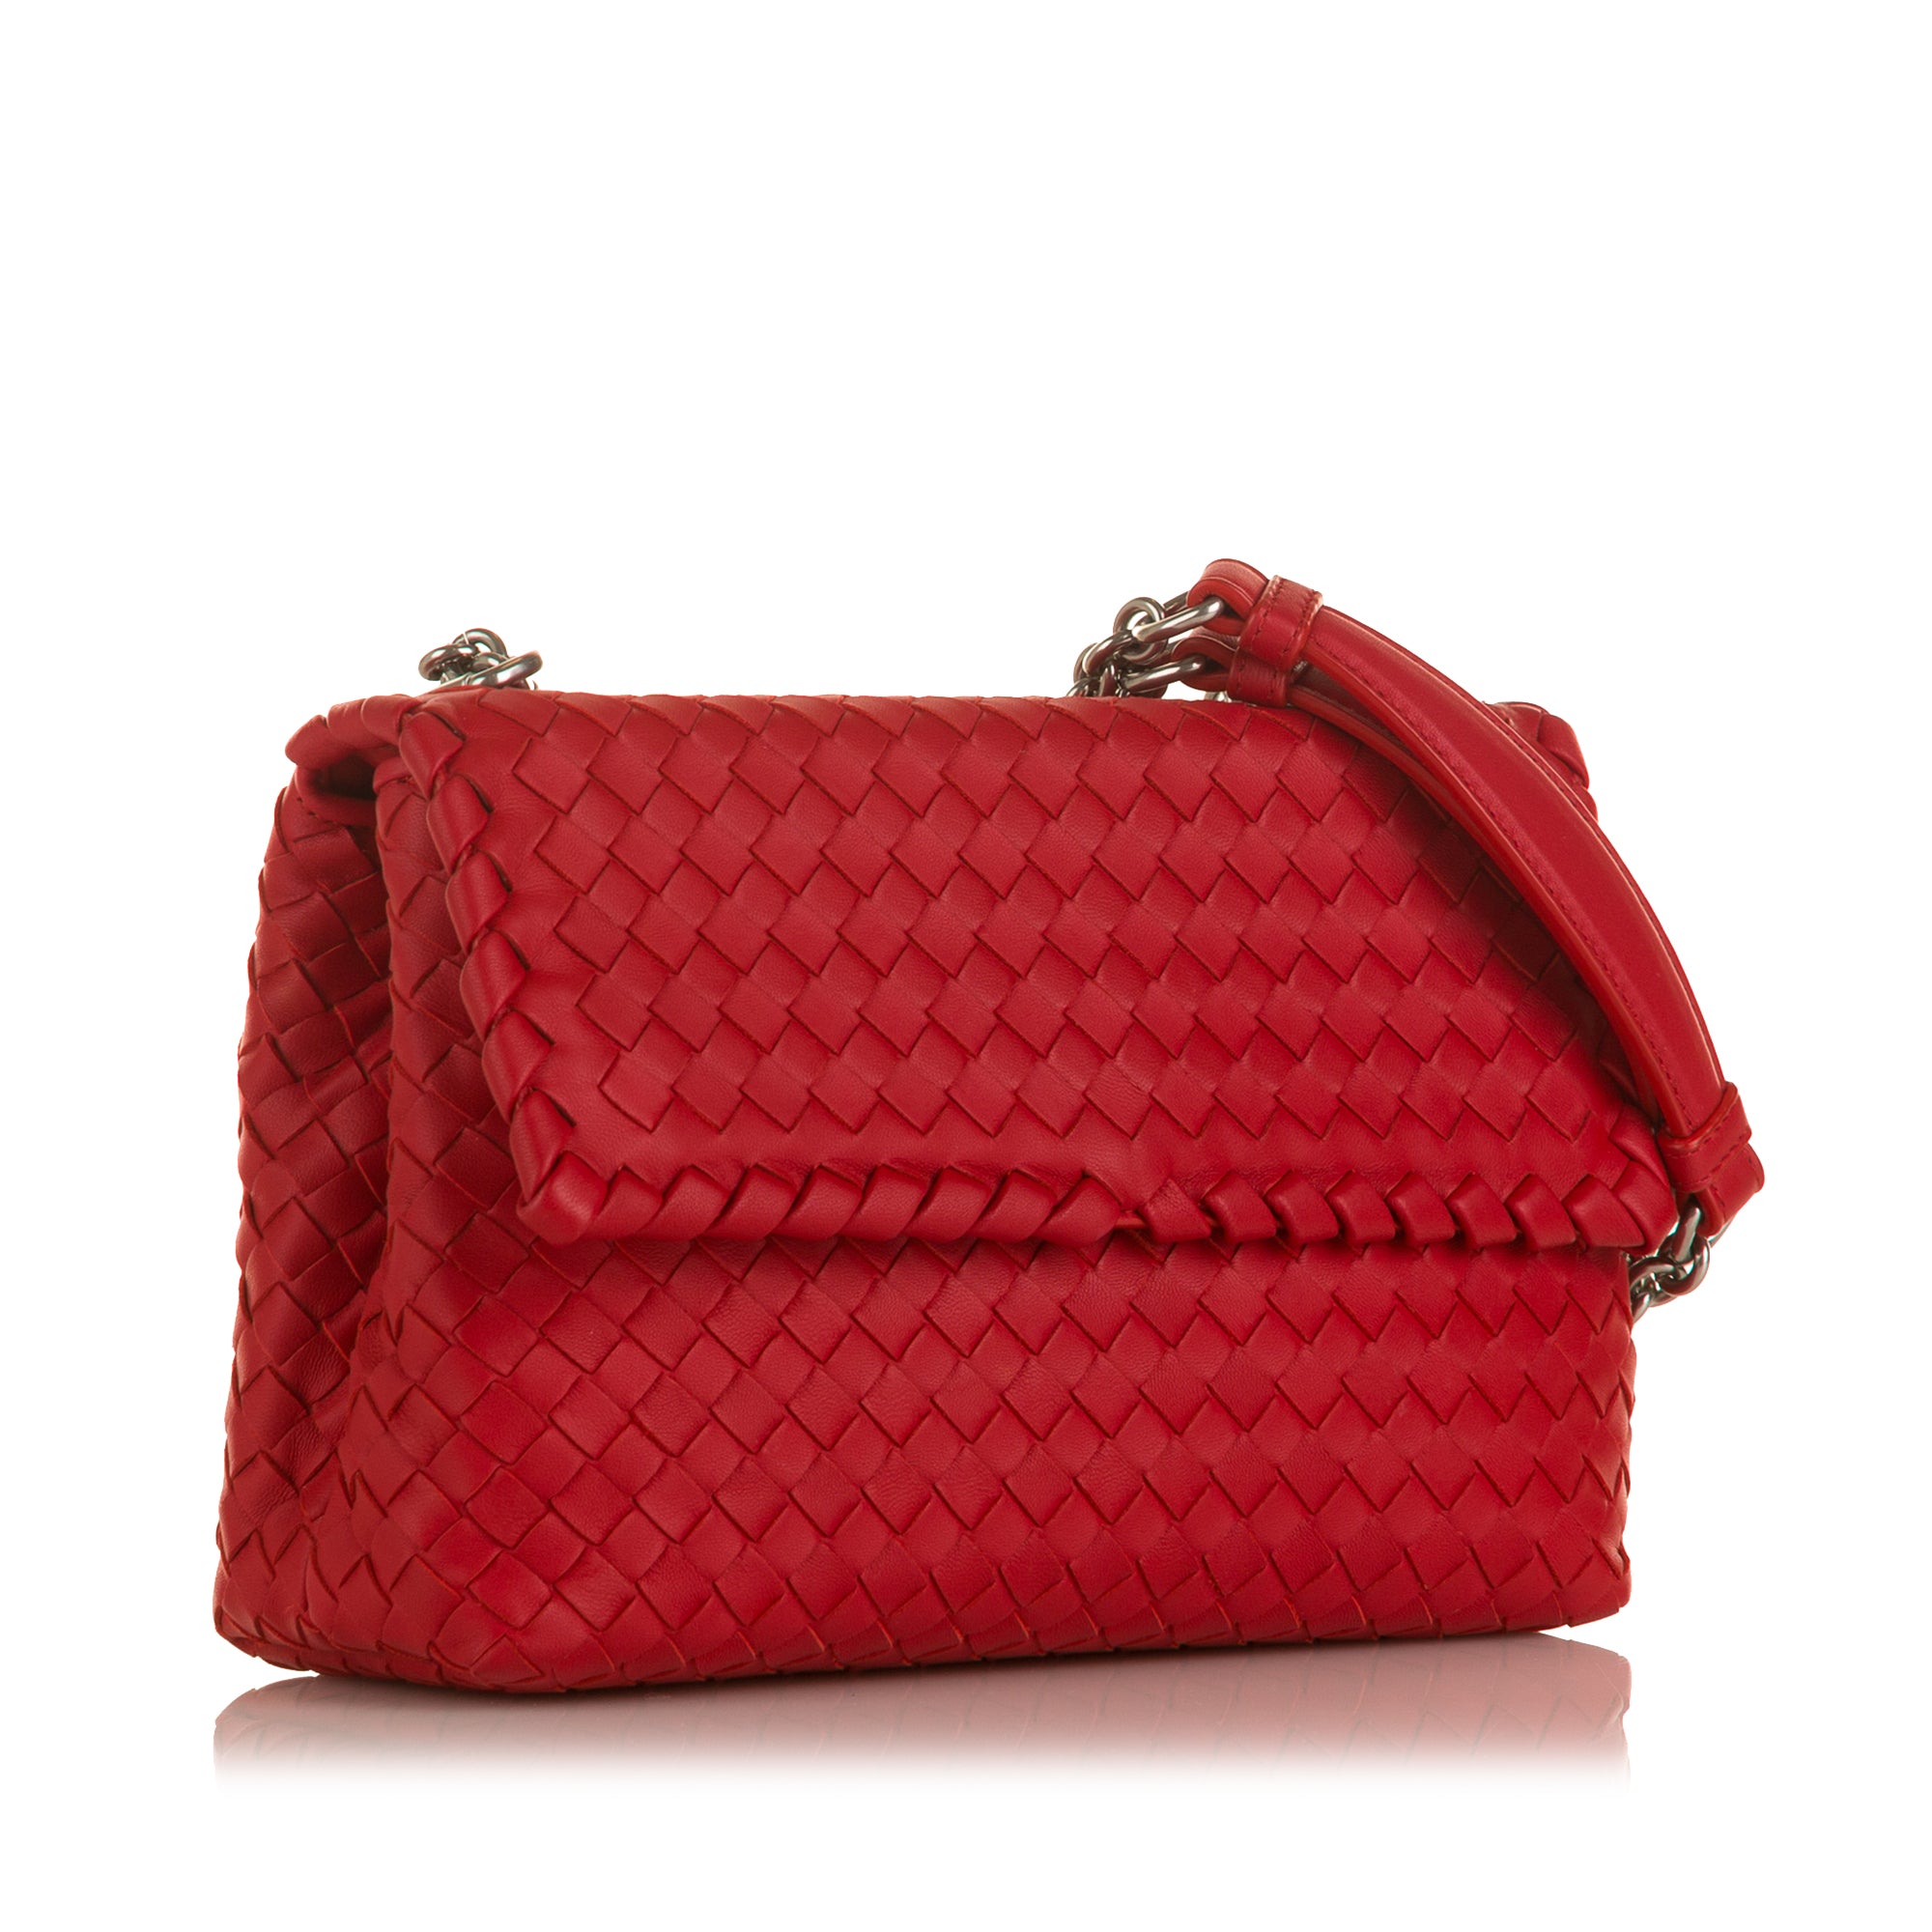 Giorgio Armani - Authenticated Handbag - Red for Women, Never Worn